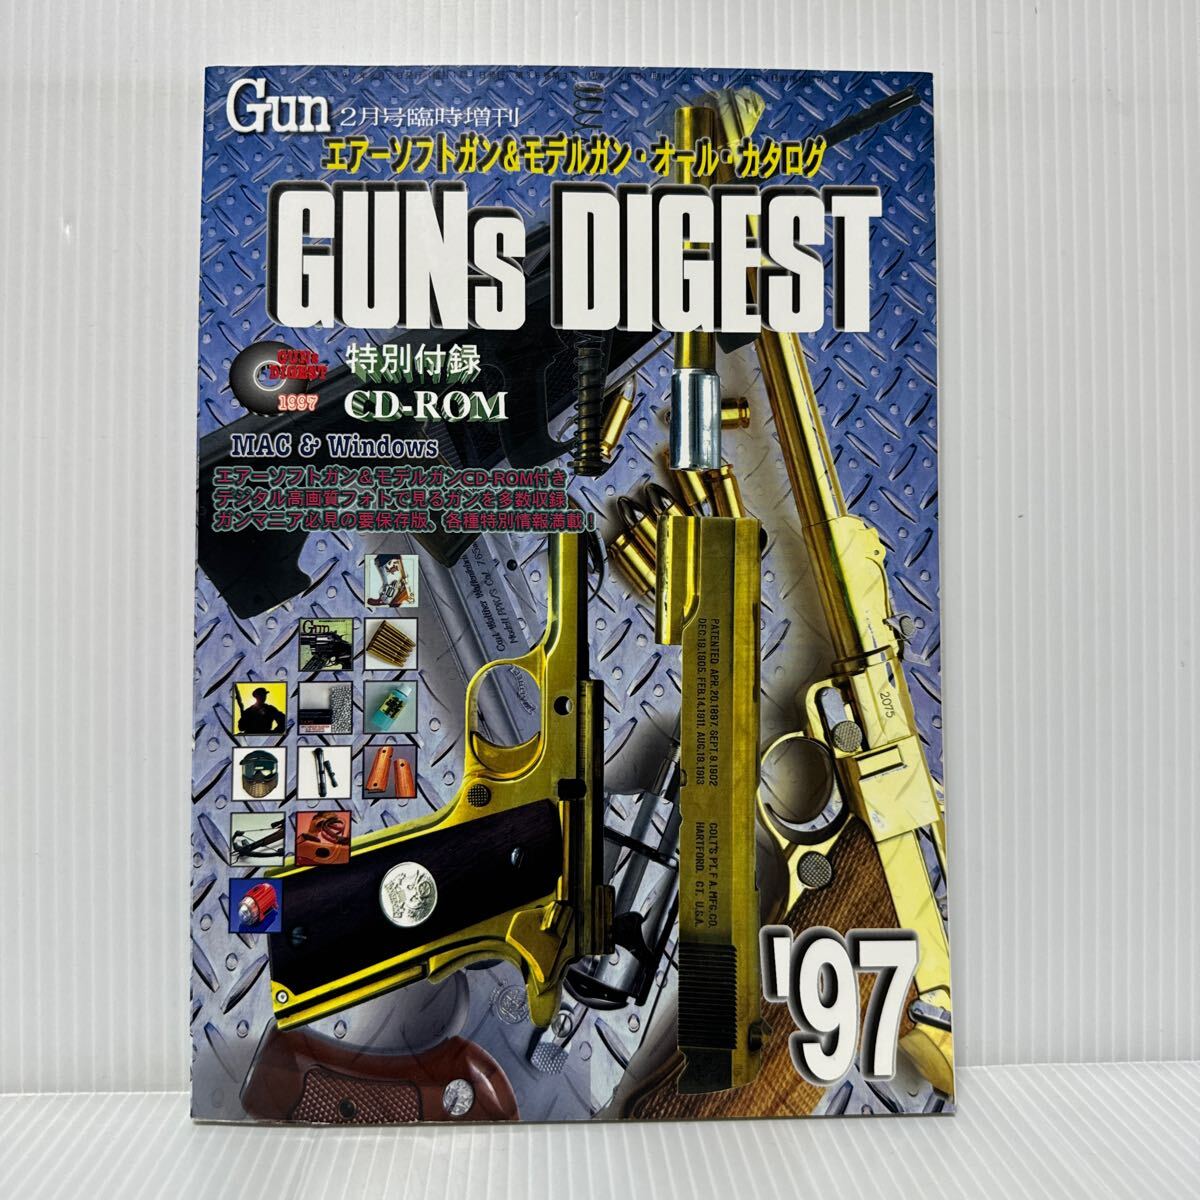 GUNs DIGEST '97 Gun 1997年2月号臨時増刊 付録付★エアーソフトガン/モデルガン/オールカタログ/デジタル高画質フォトの画像1